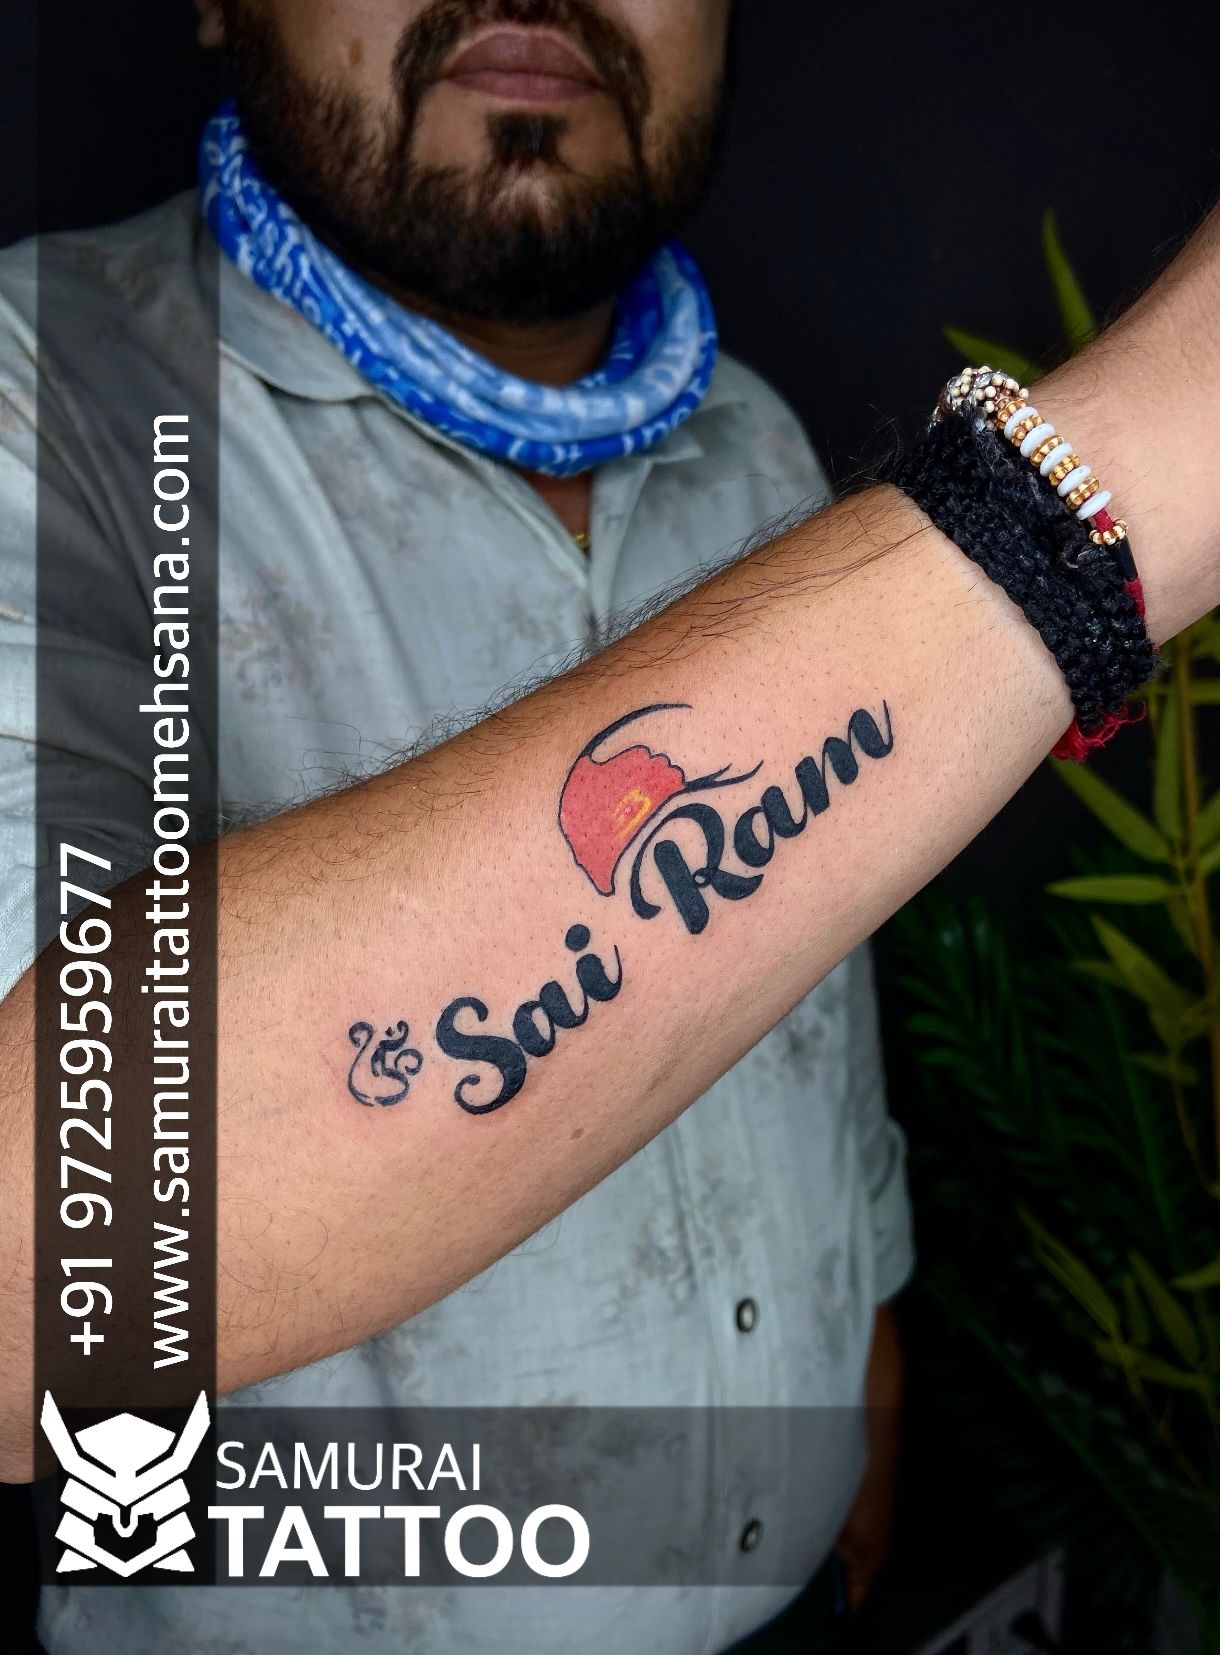 Ganesh P Tattooist on Twitter sairam tattoo design tattoo by Ganesh  Panchal Tattooist colouerfull tattooihopeyoulikeit nandedcity  nandedmodels maharashtra nandedpost ganeshptattooist 2019 address  shop no 36 groundfloor 